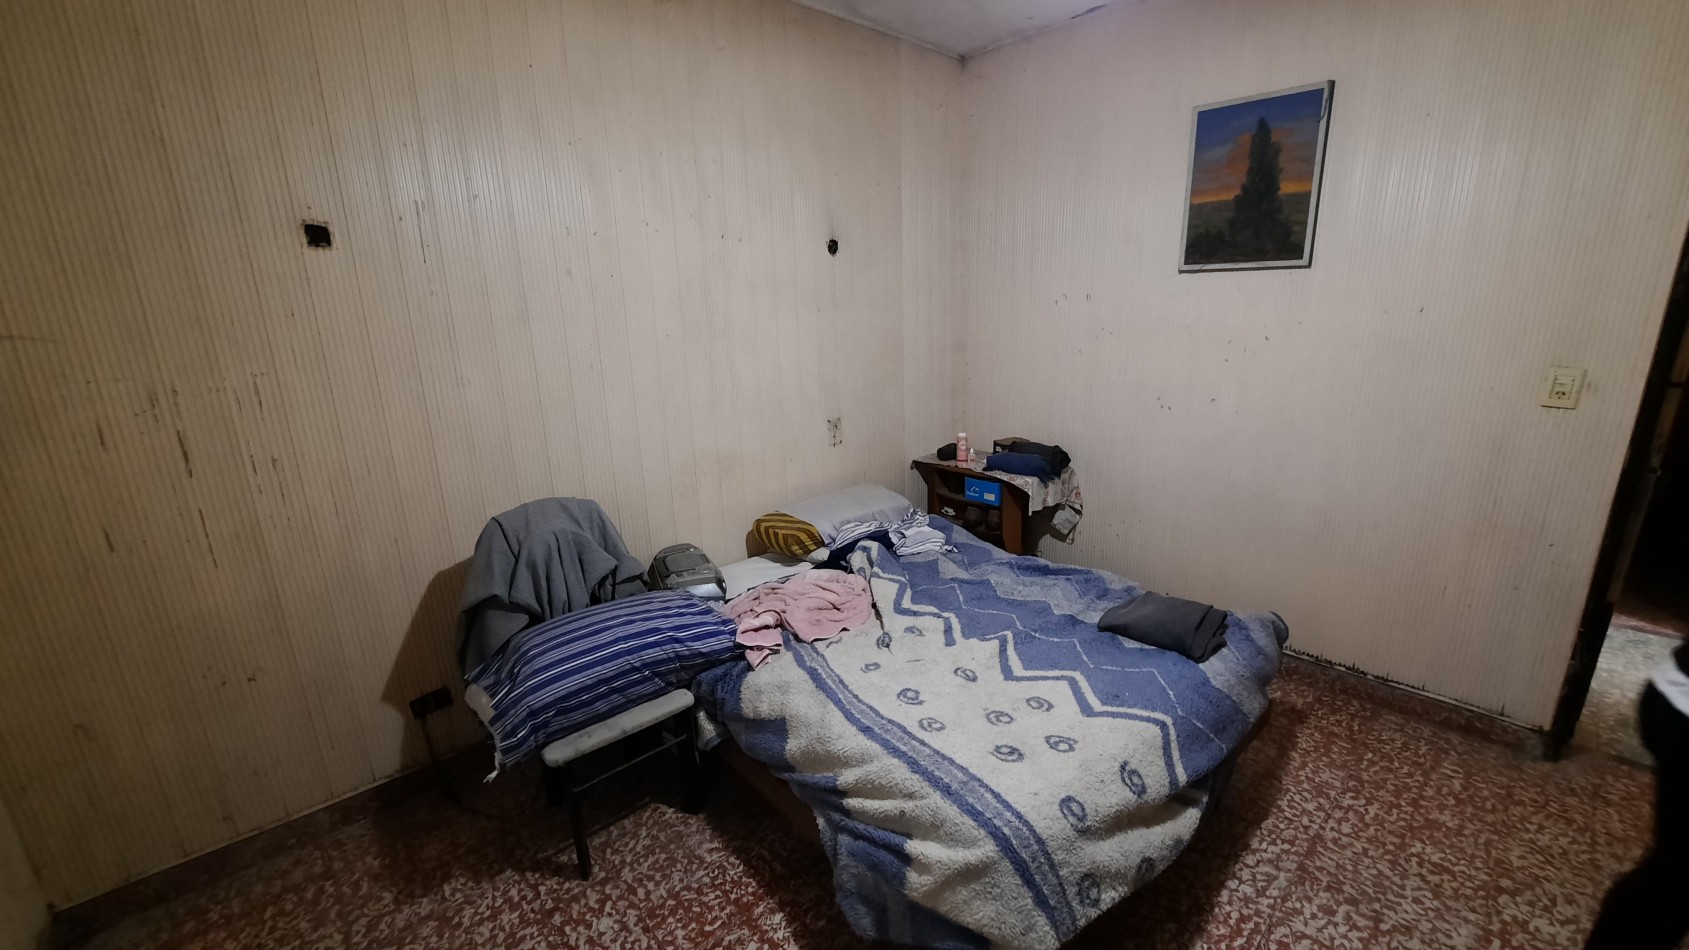 Casa de 3 dorm. a reciclar en Bolivar 535 - Amplio LOTE